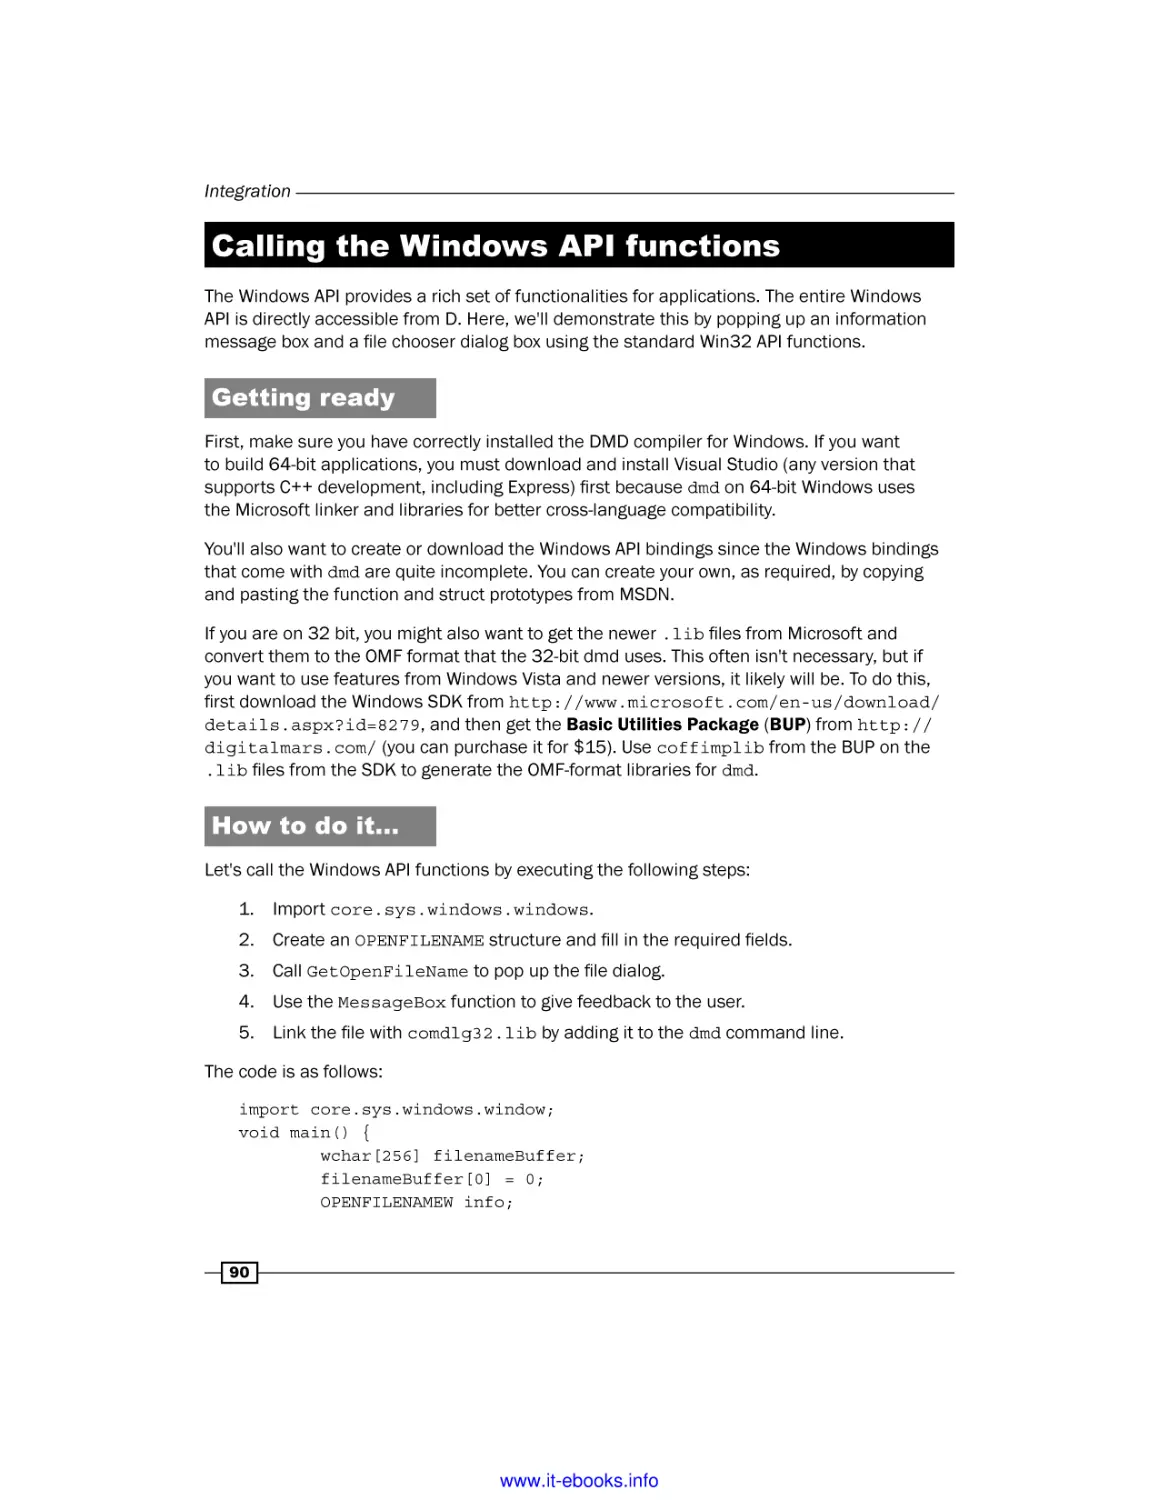 Calling the Windows API functions